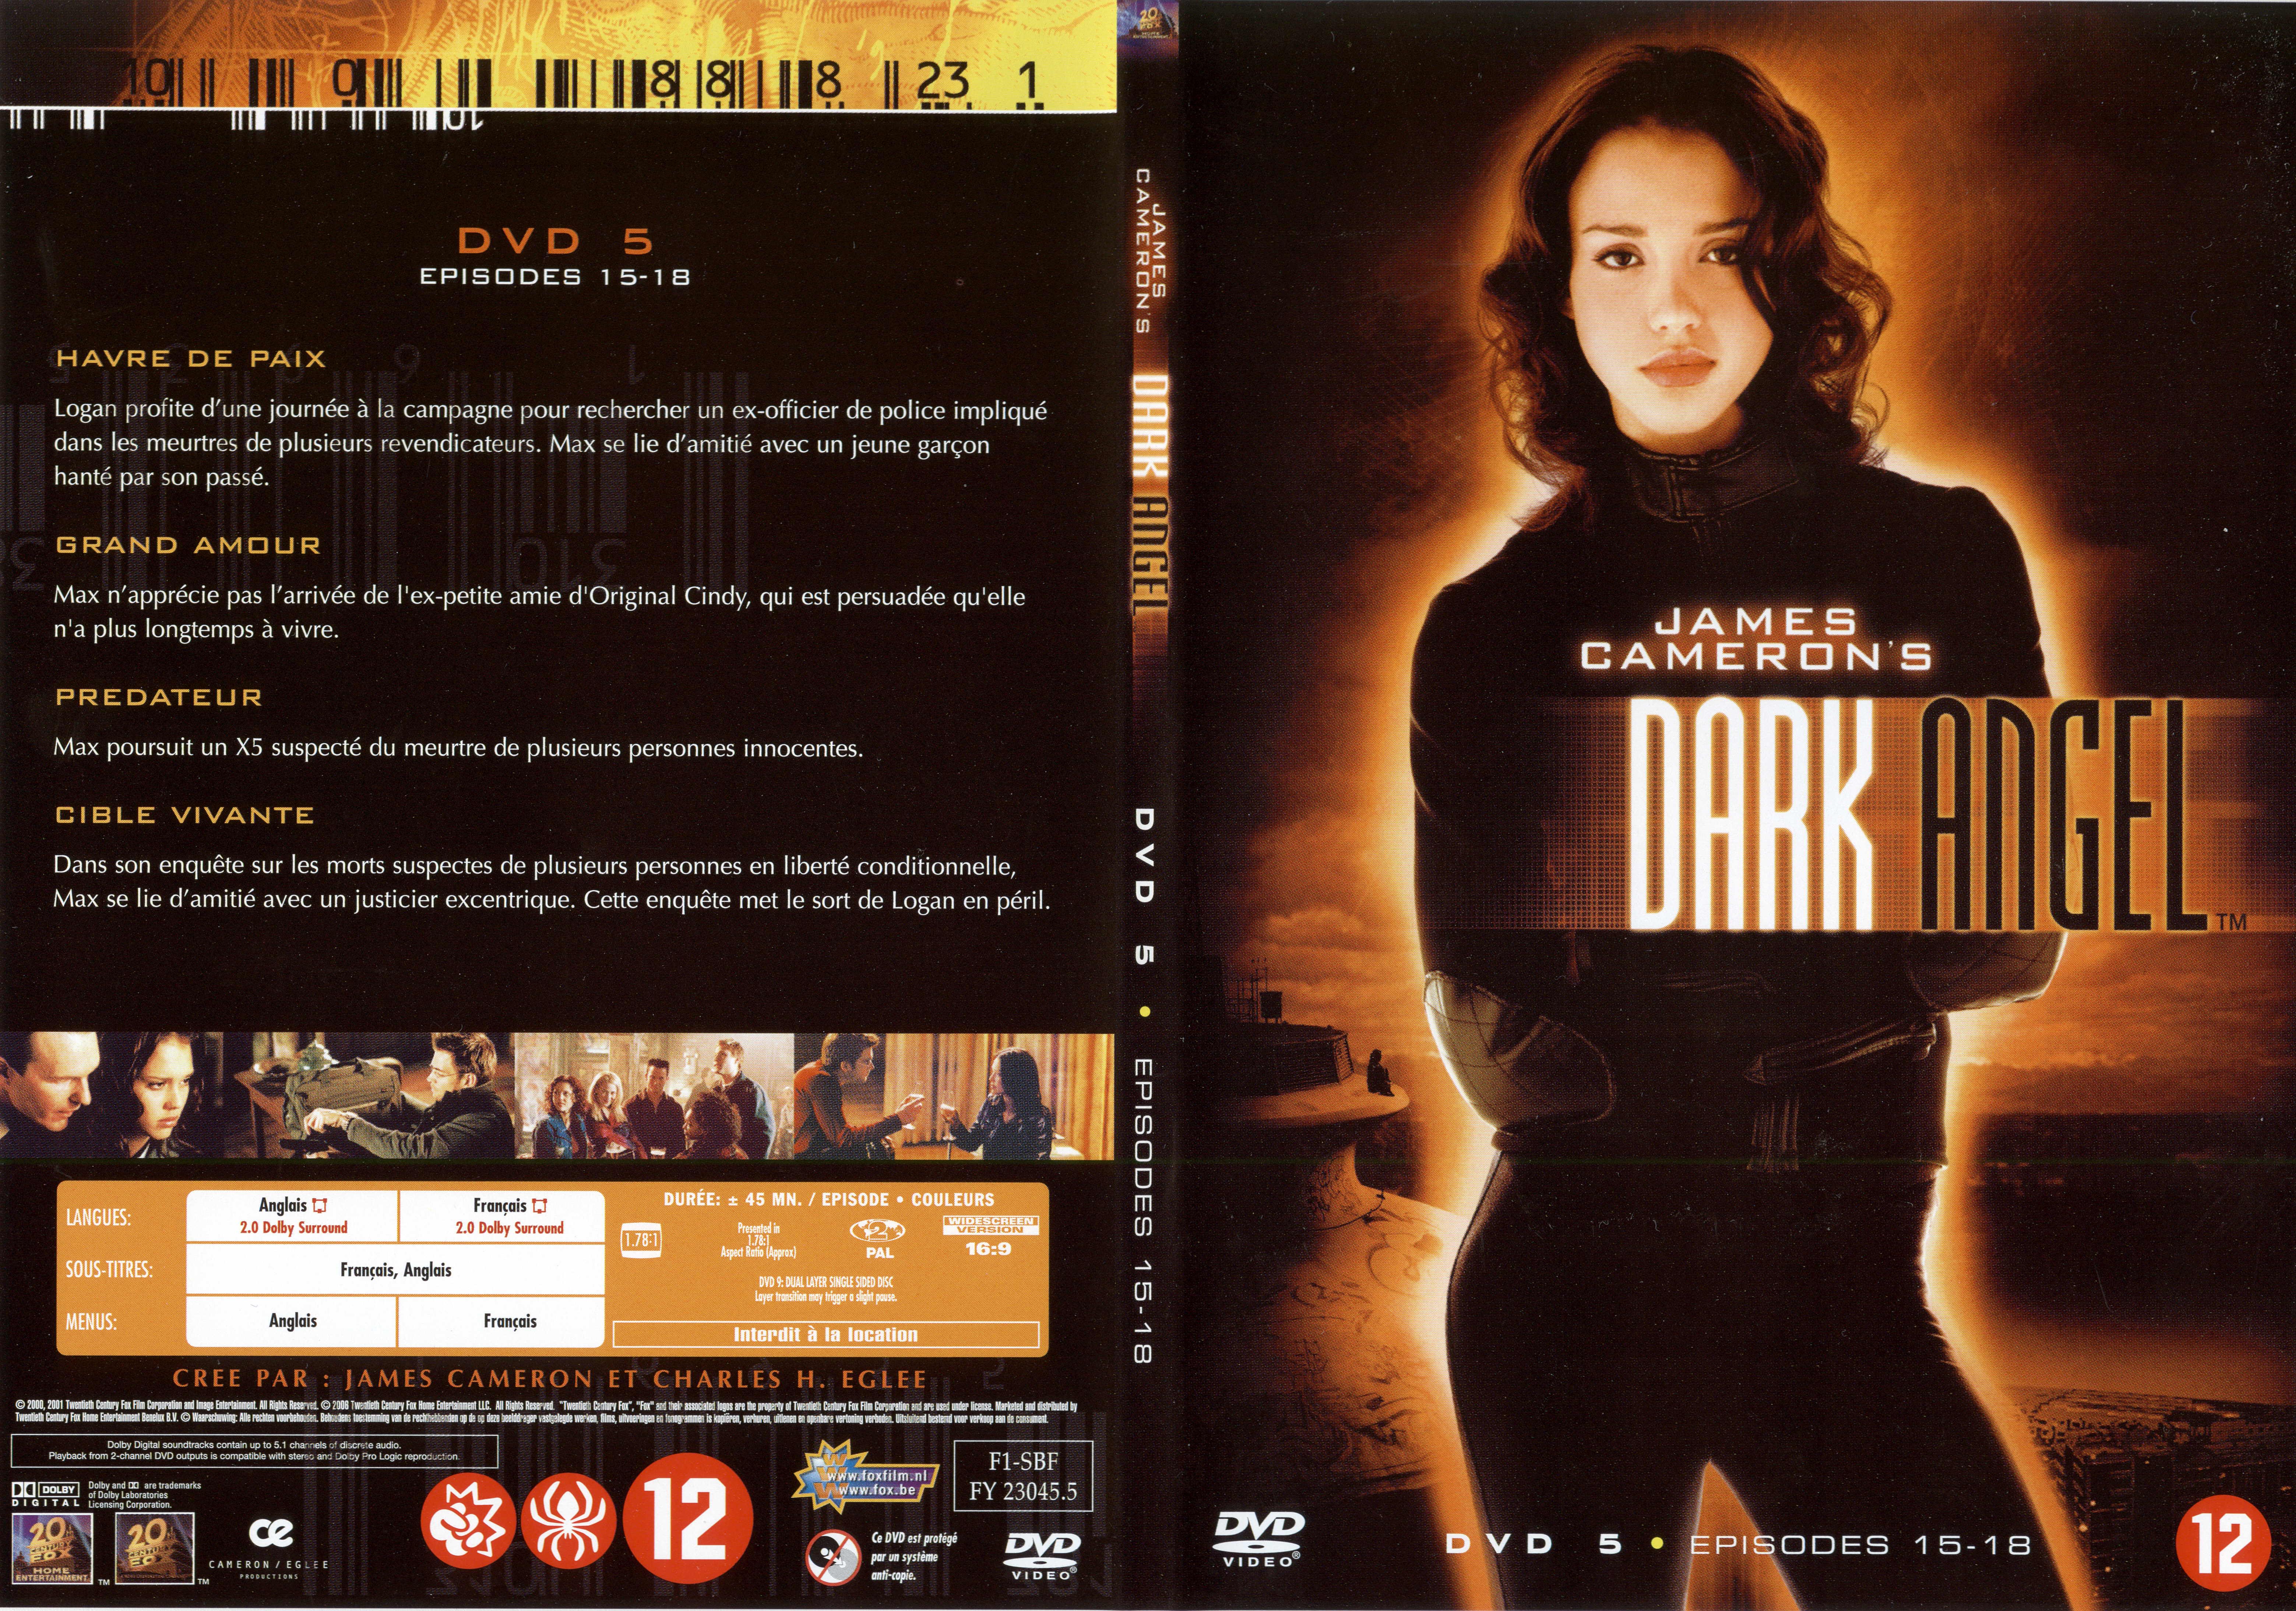 Jaquette DVD Dark Angel Saison 1 DVD 5 v2